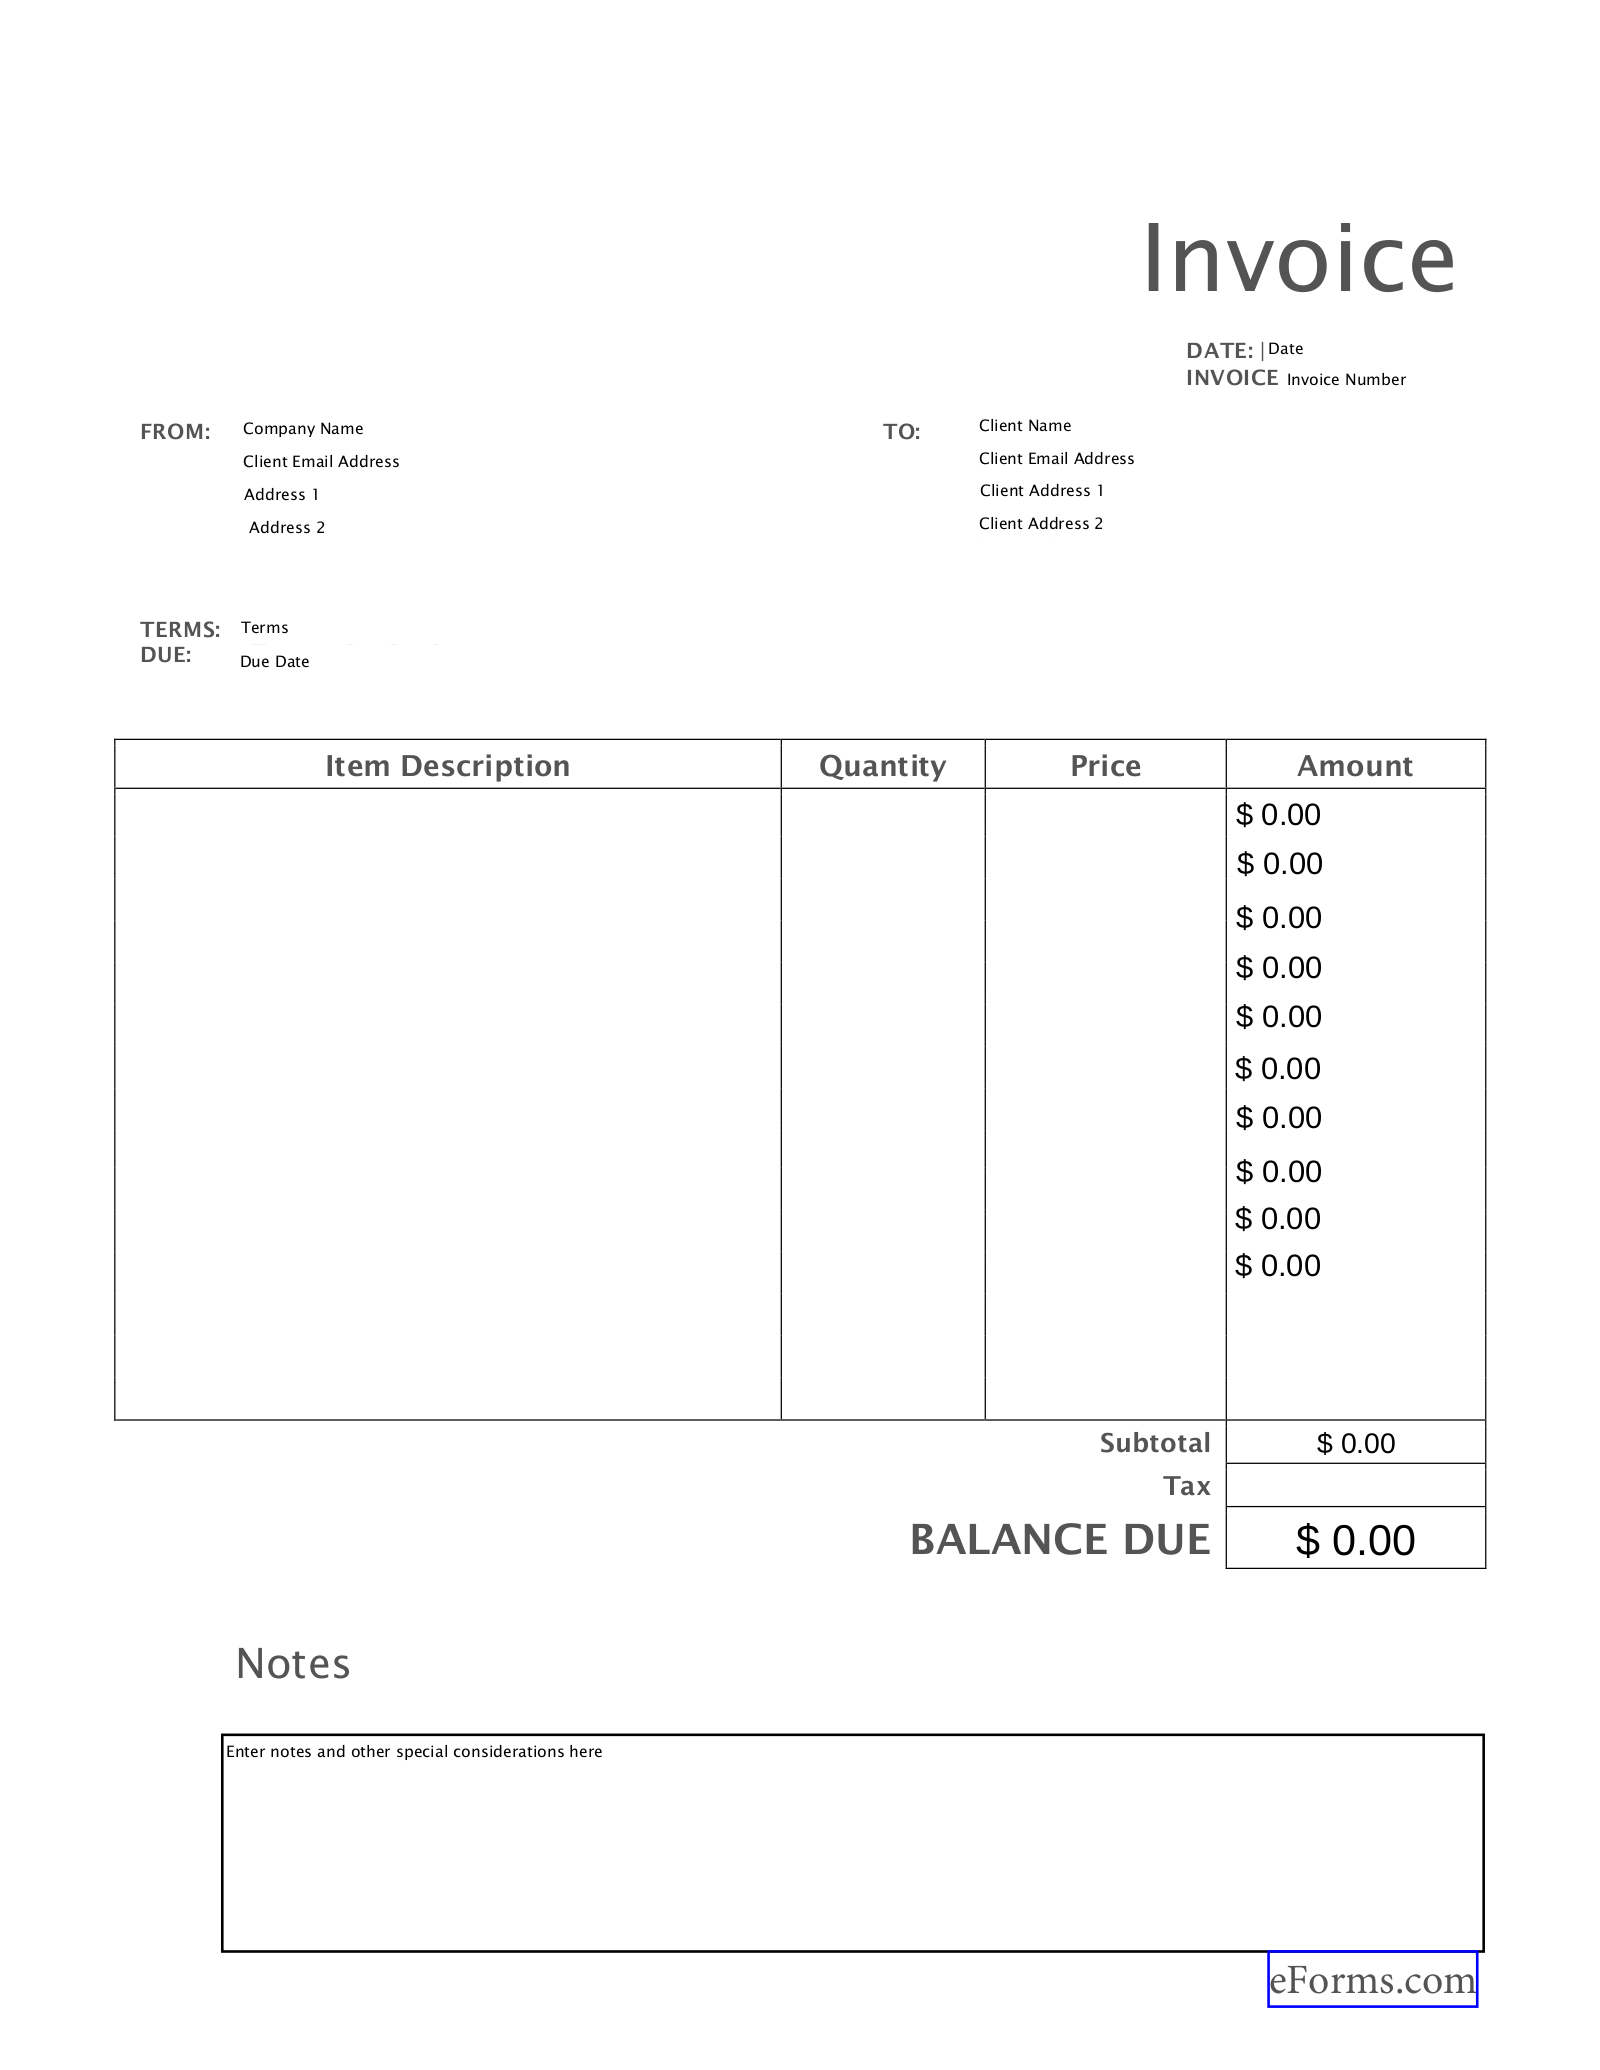 Blank Invoice Templates (30)